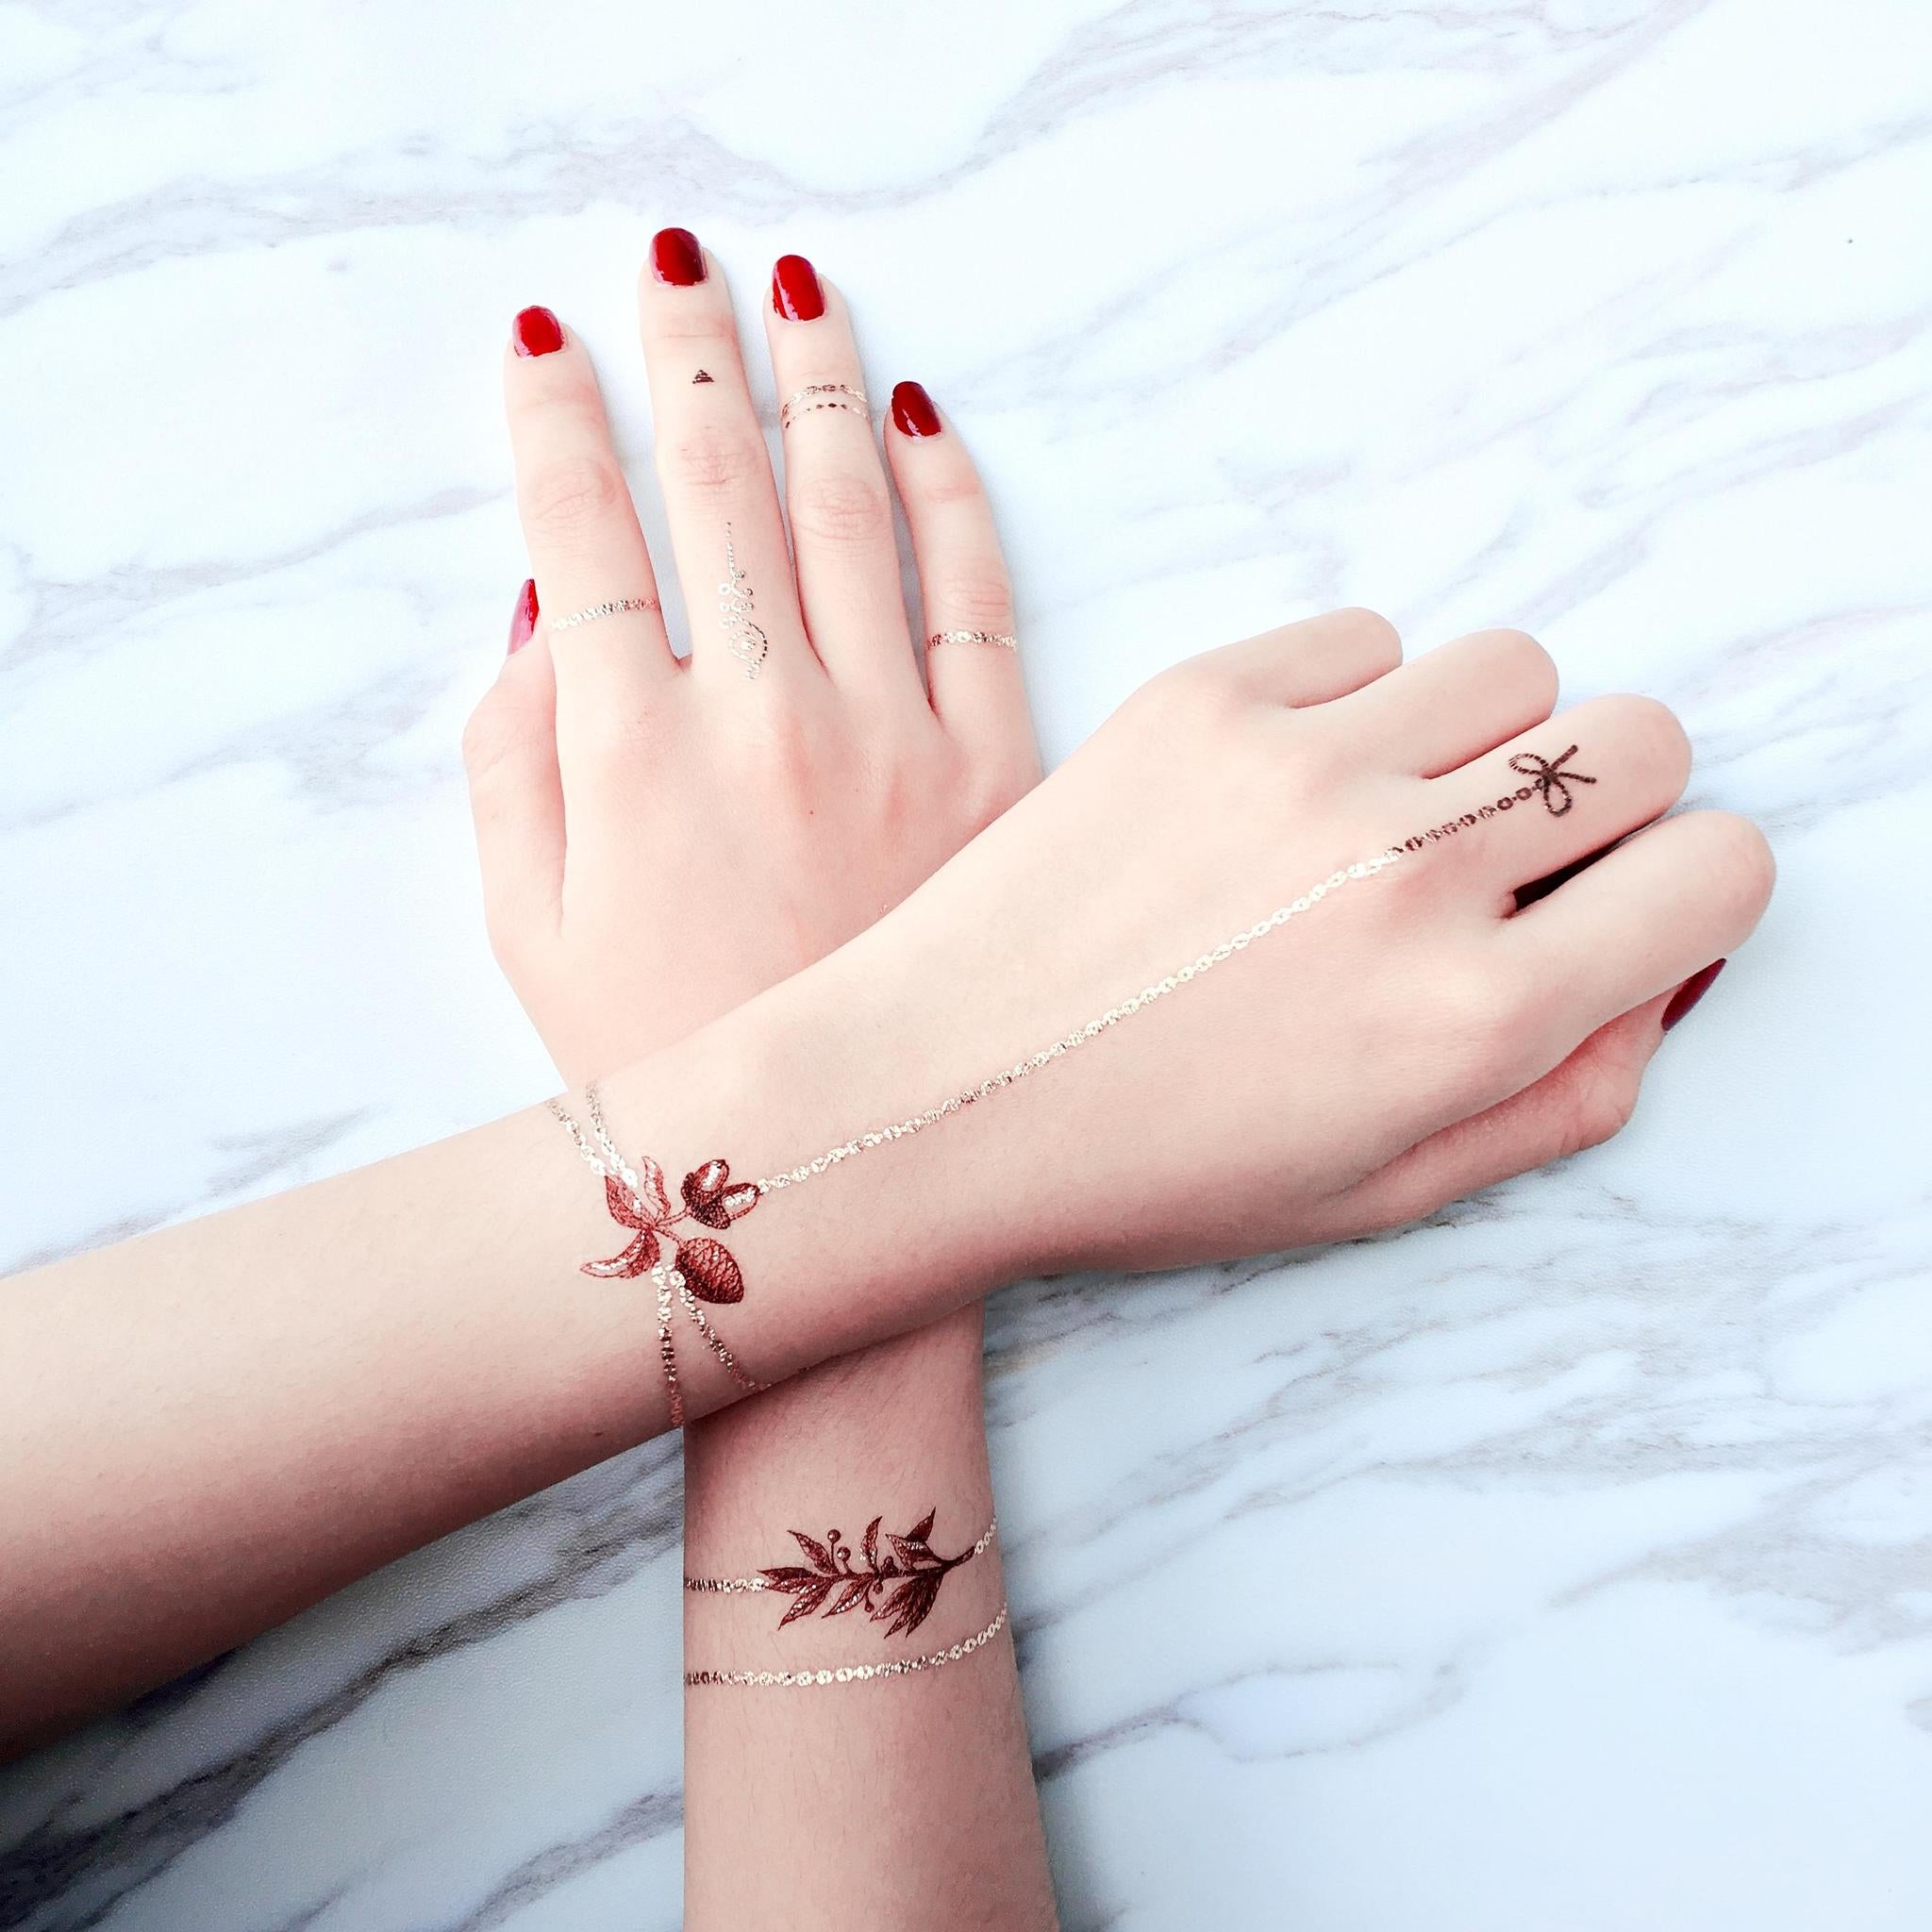 Share more than 207 flower chain tattoo super hot